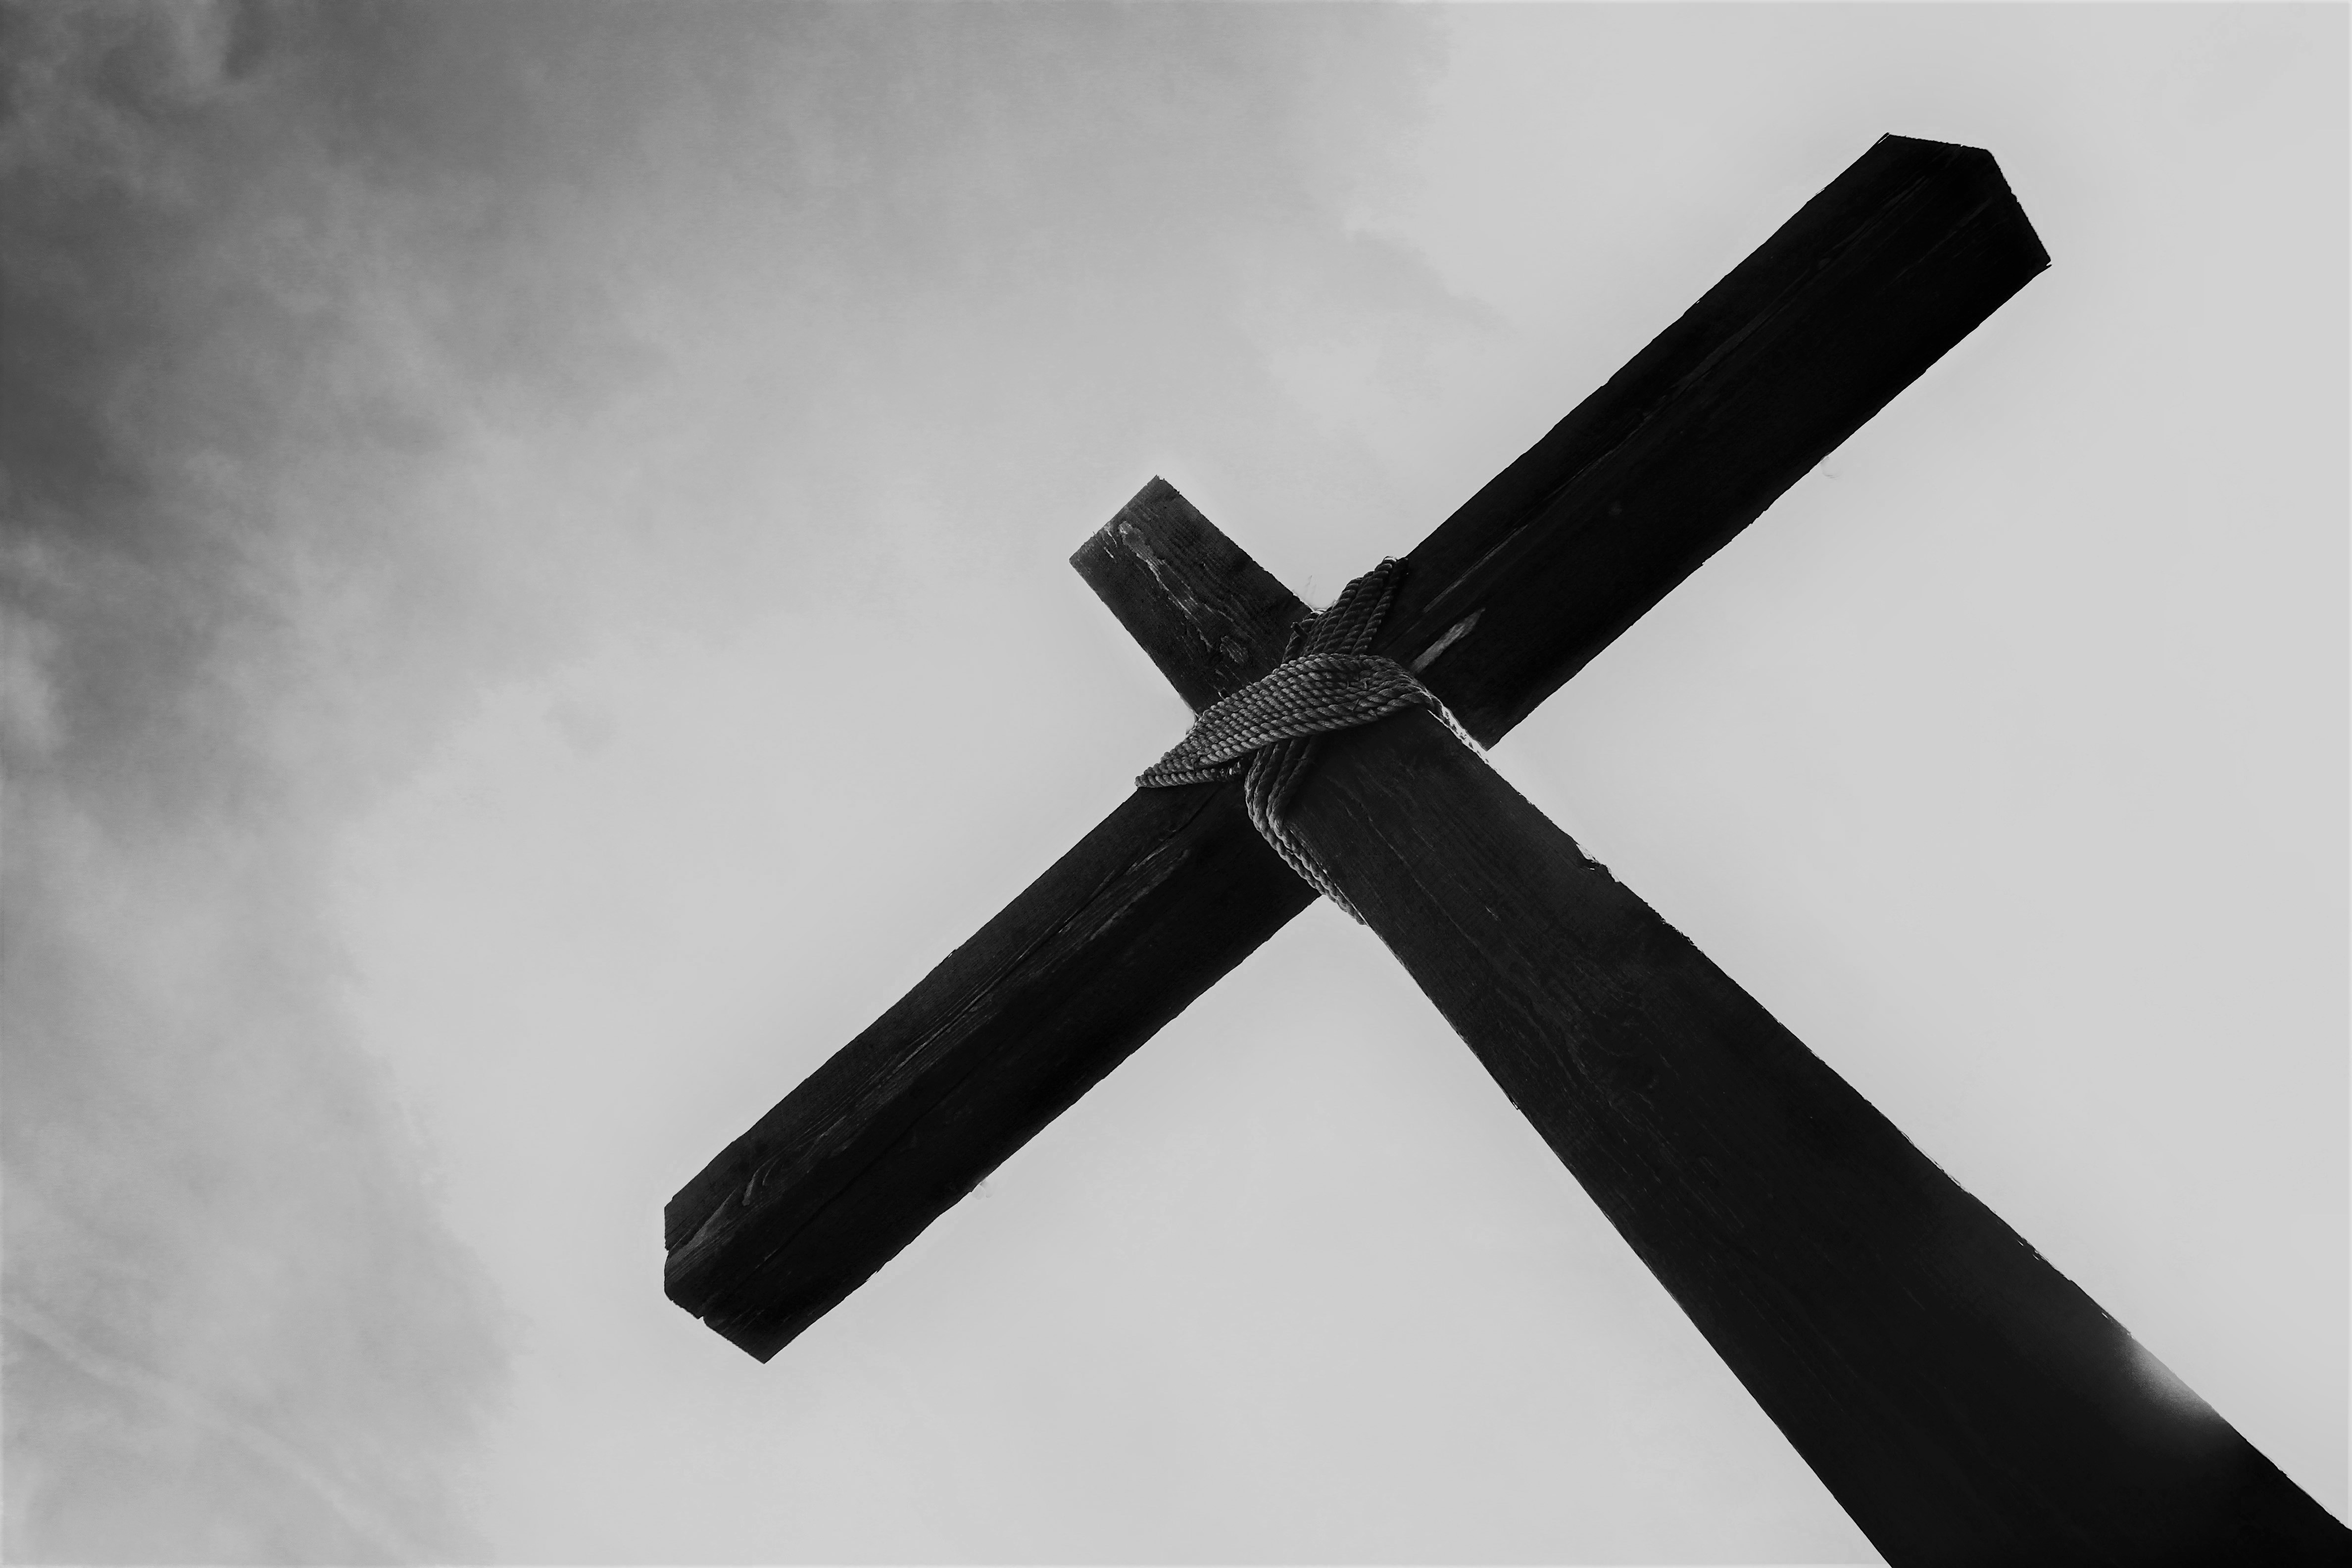 Cross of Christ Religious Stock Image